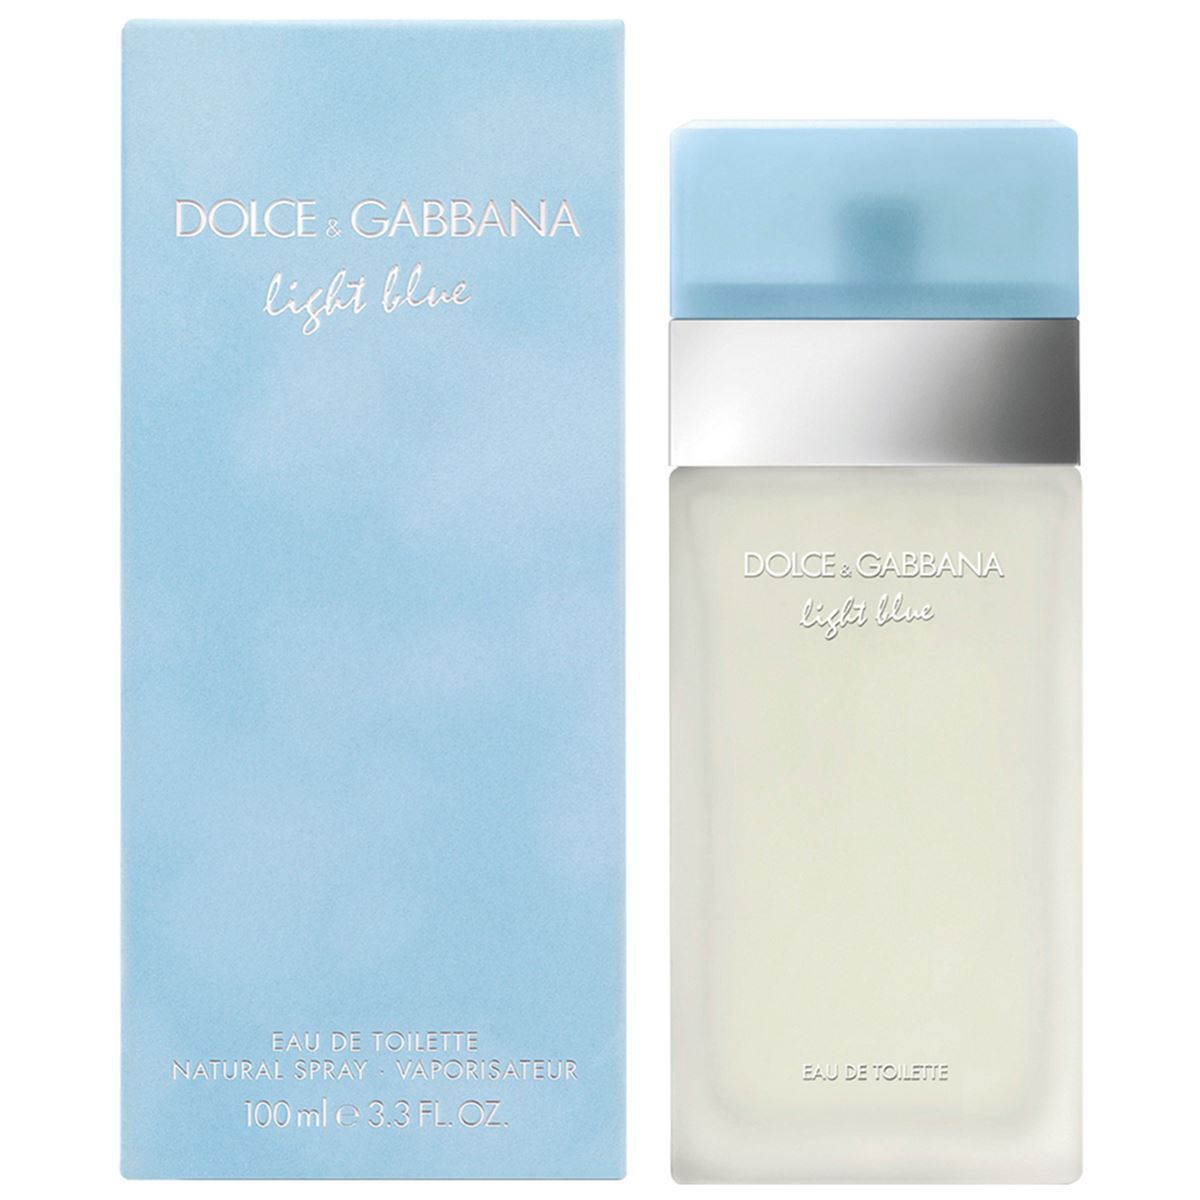 Dolce & Gabbana Light Blue by Dolce & Gabbana Women 3.3 oz Eau de Toilette Spray | FragranceBaba.com